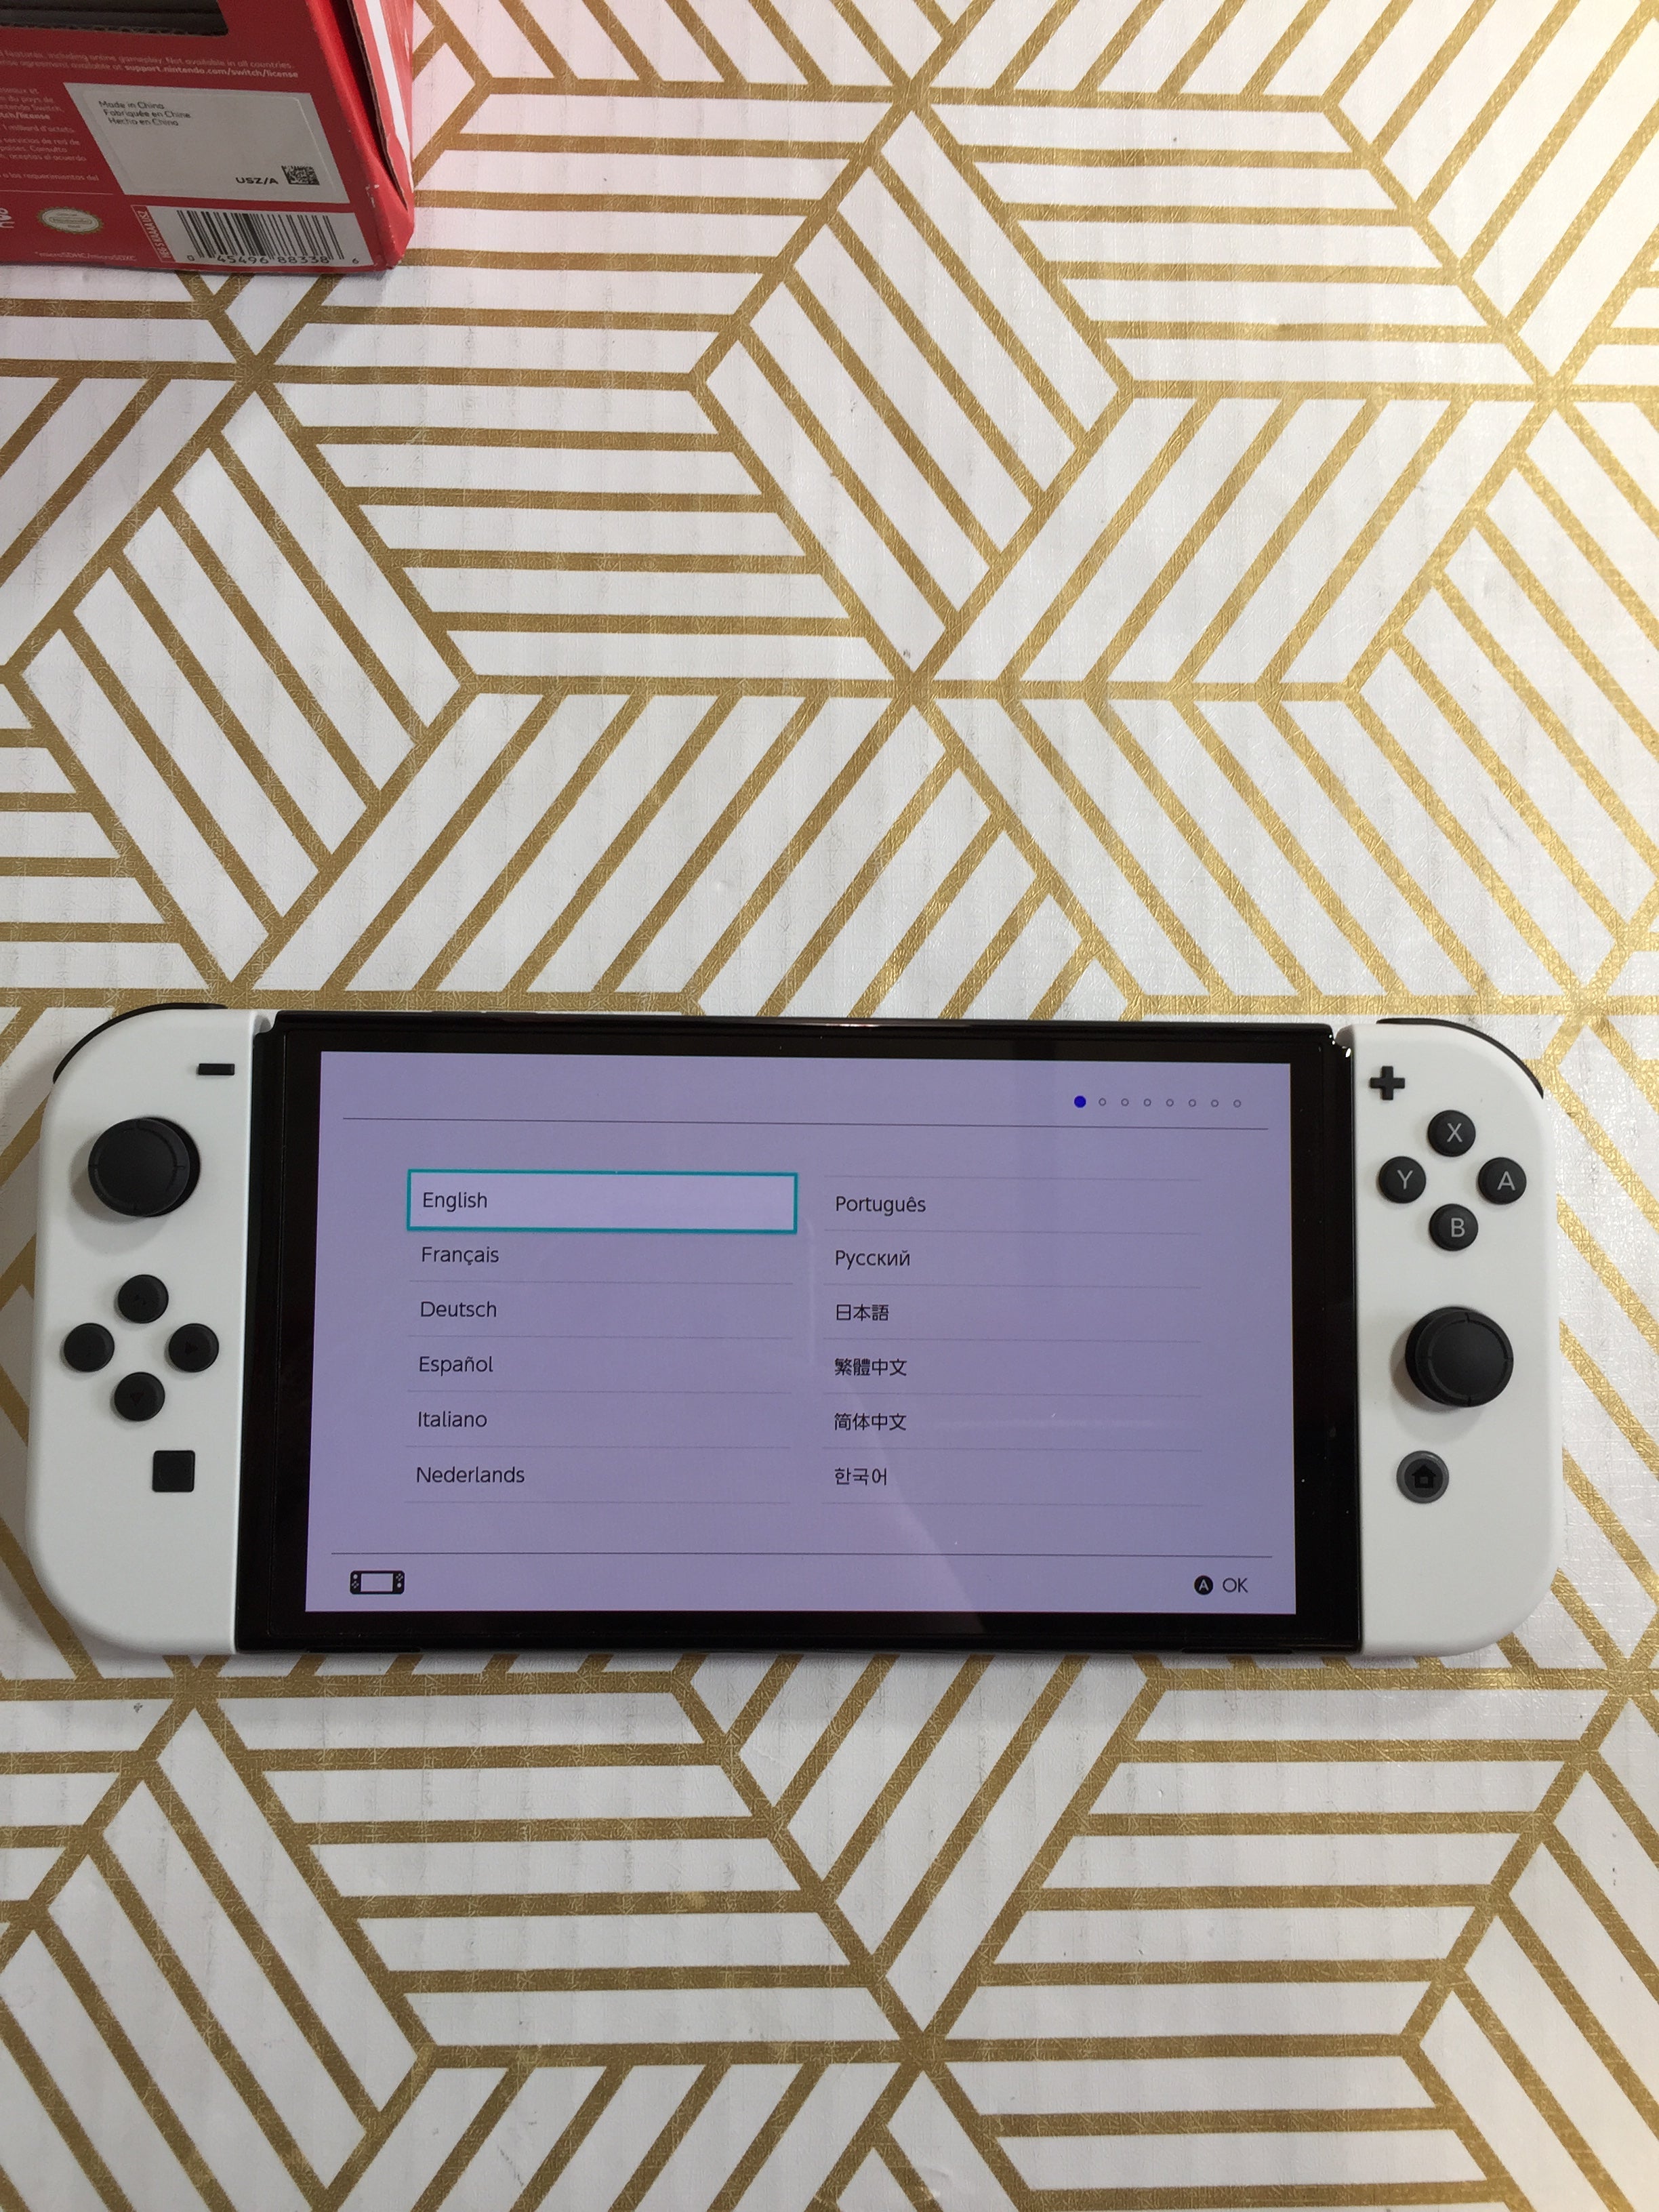 Nintendo Switch - OLED Model with White Joy-Con (7760601809134)